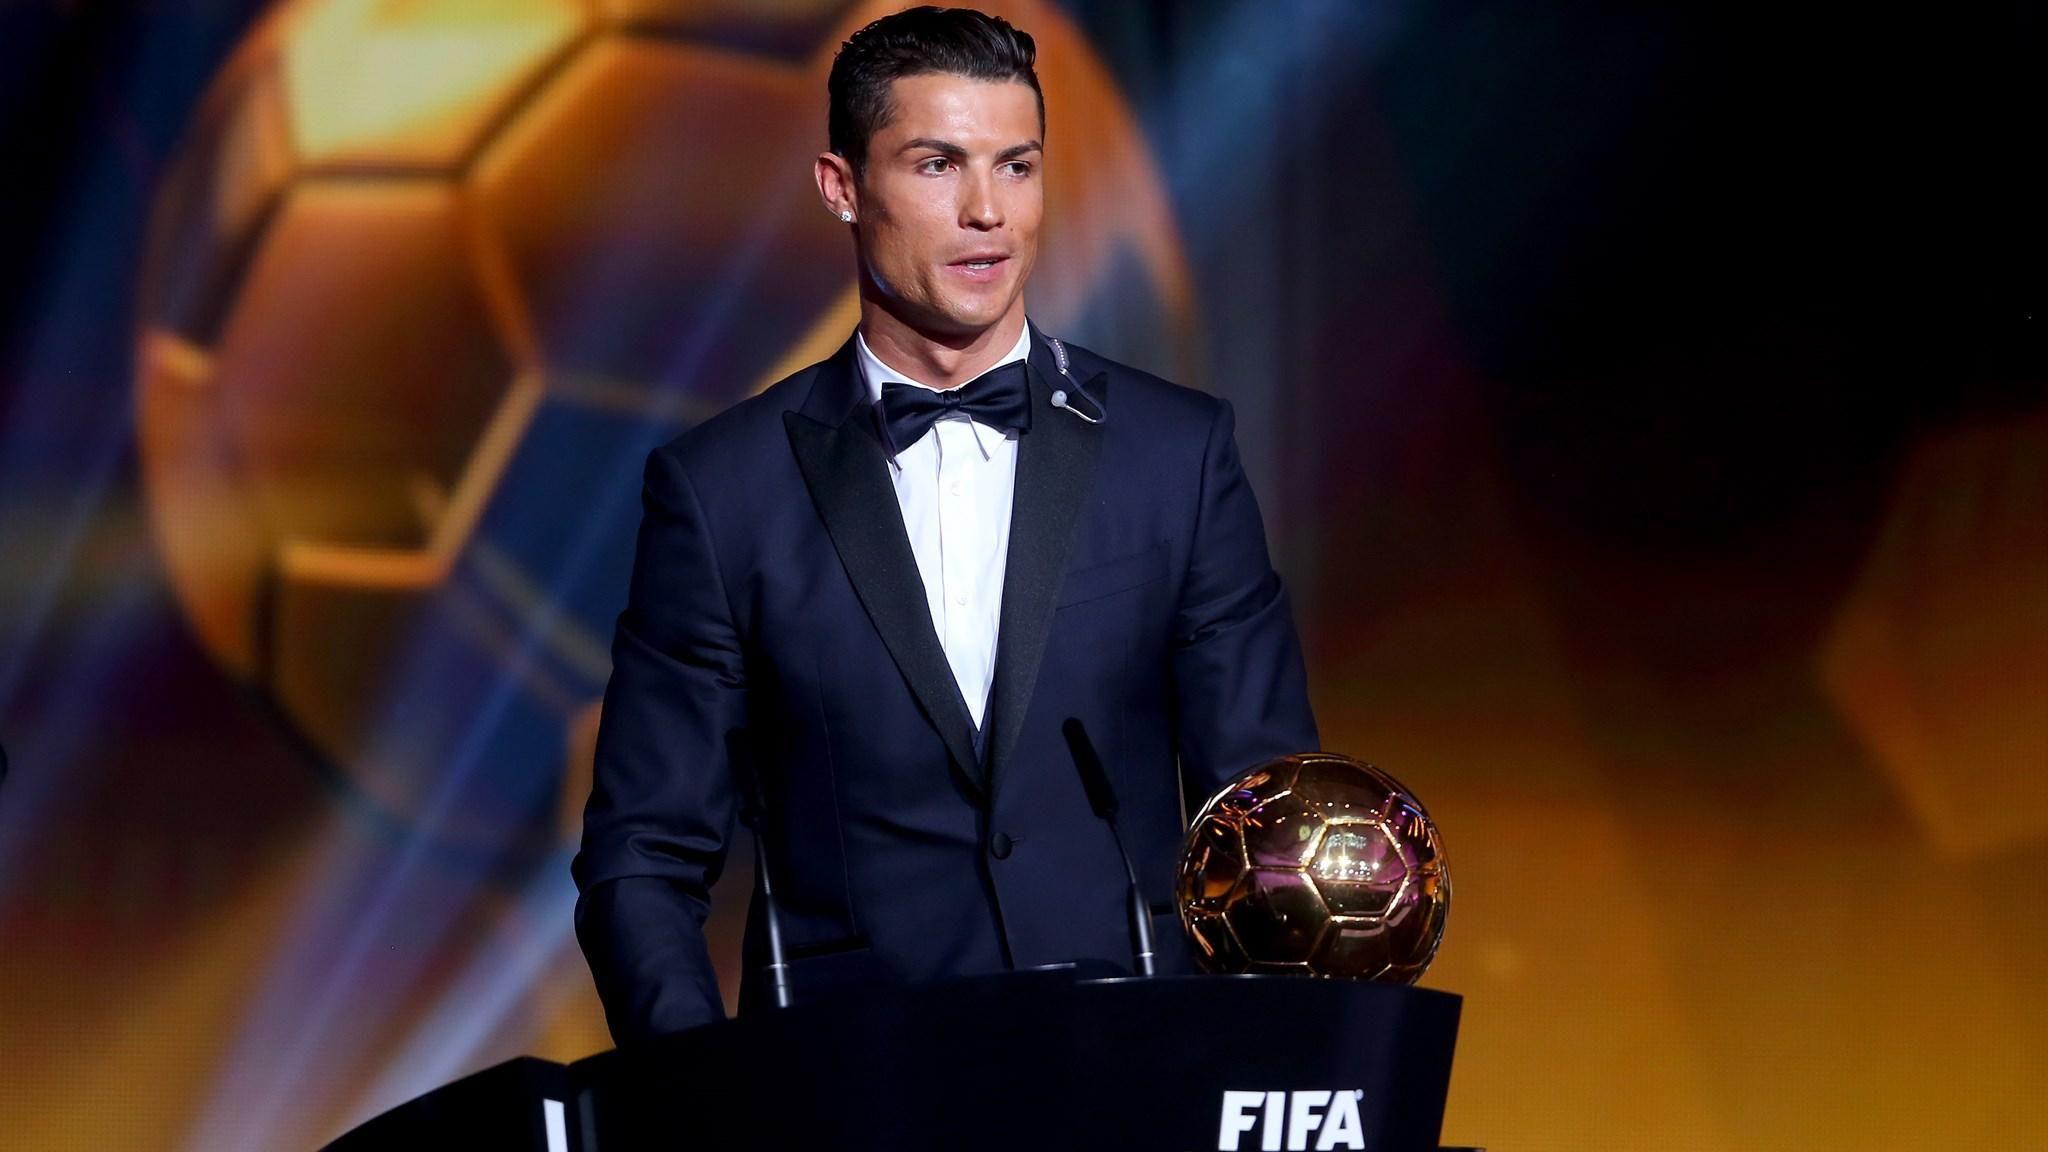 FIFA Ballon d'Or nominee Cristiano Ronaldo wallpaper. sports